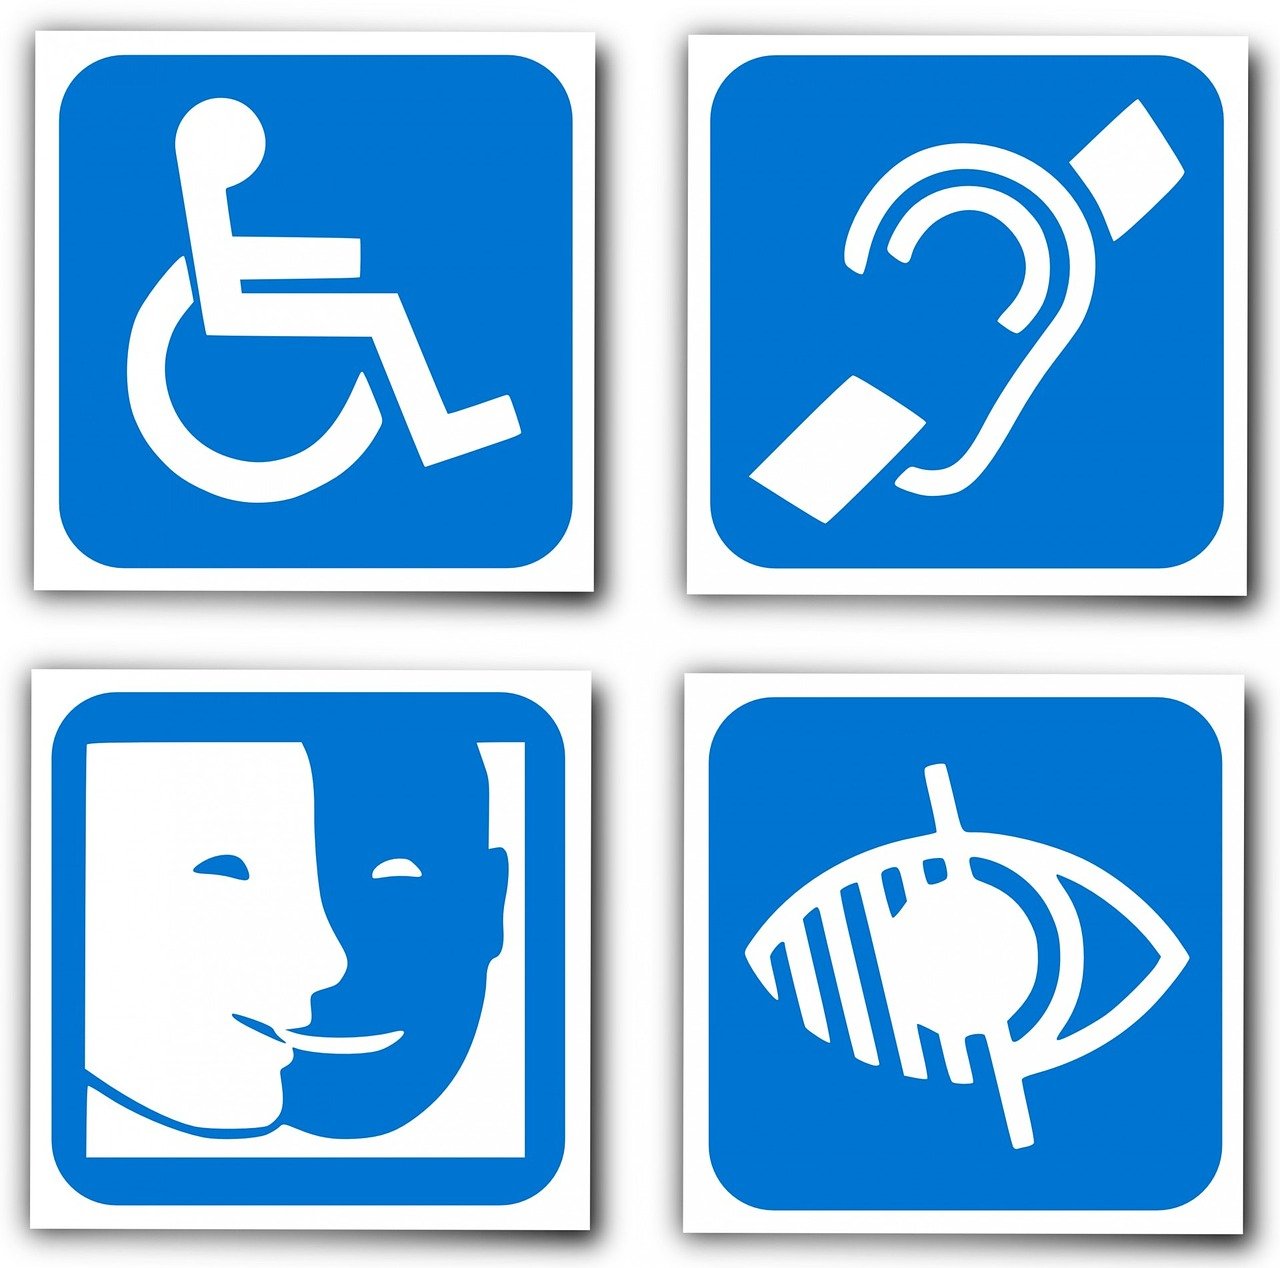 Behinderung Handicap Inklusion